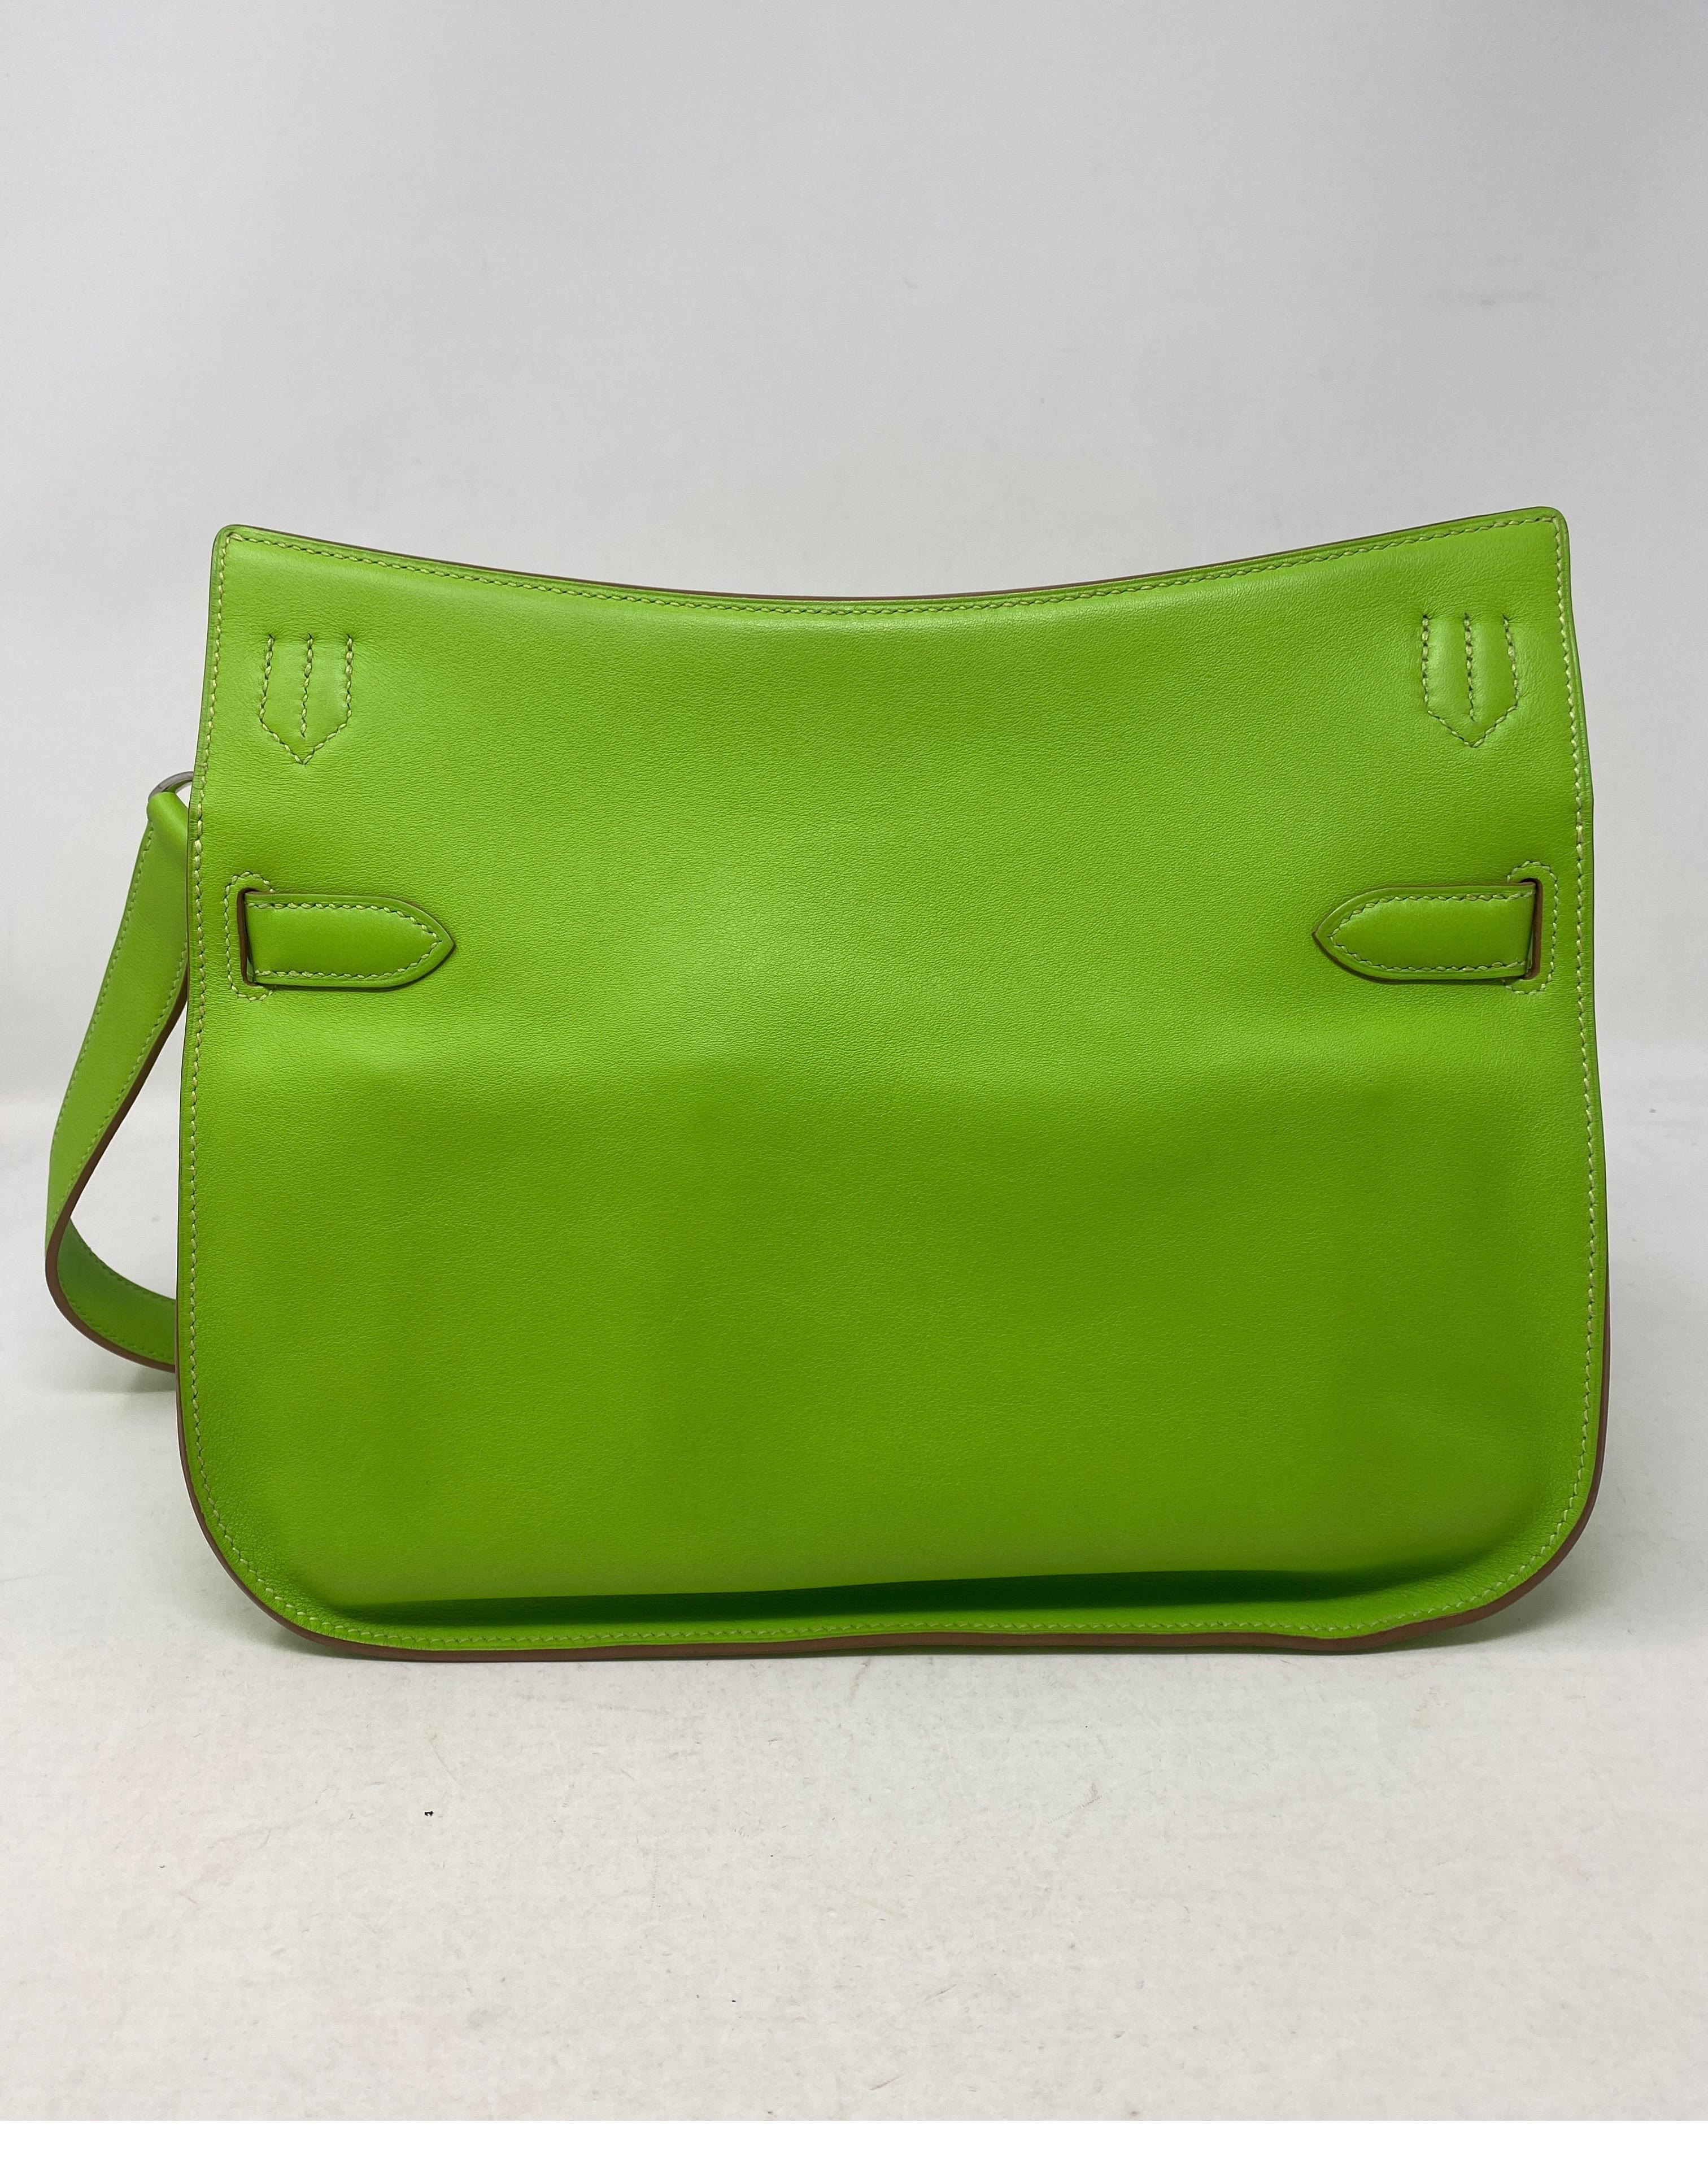 Hermès Swift Jypsiere Kiwi Green Crossbody Bag
Neon Green Swift Leather
Palladium-Plated Hardware
Single Adjustable Shoulder Strap
Leather Lining & Three Interior Pockets
Turn-Lock Closure at Front